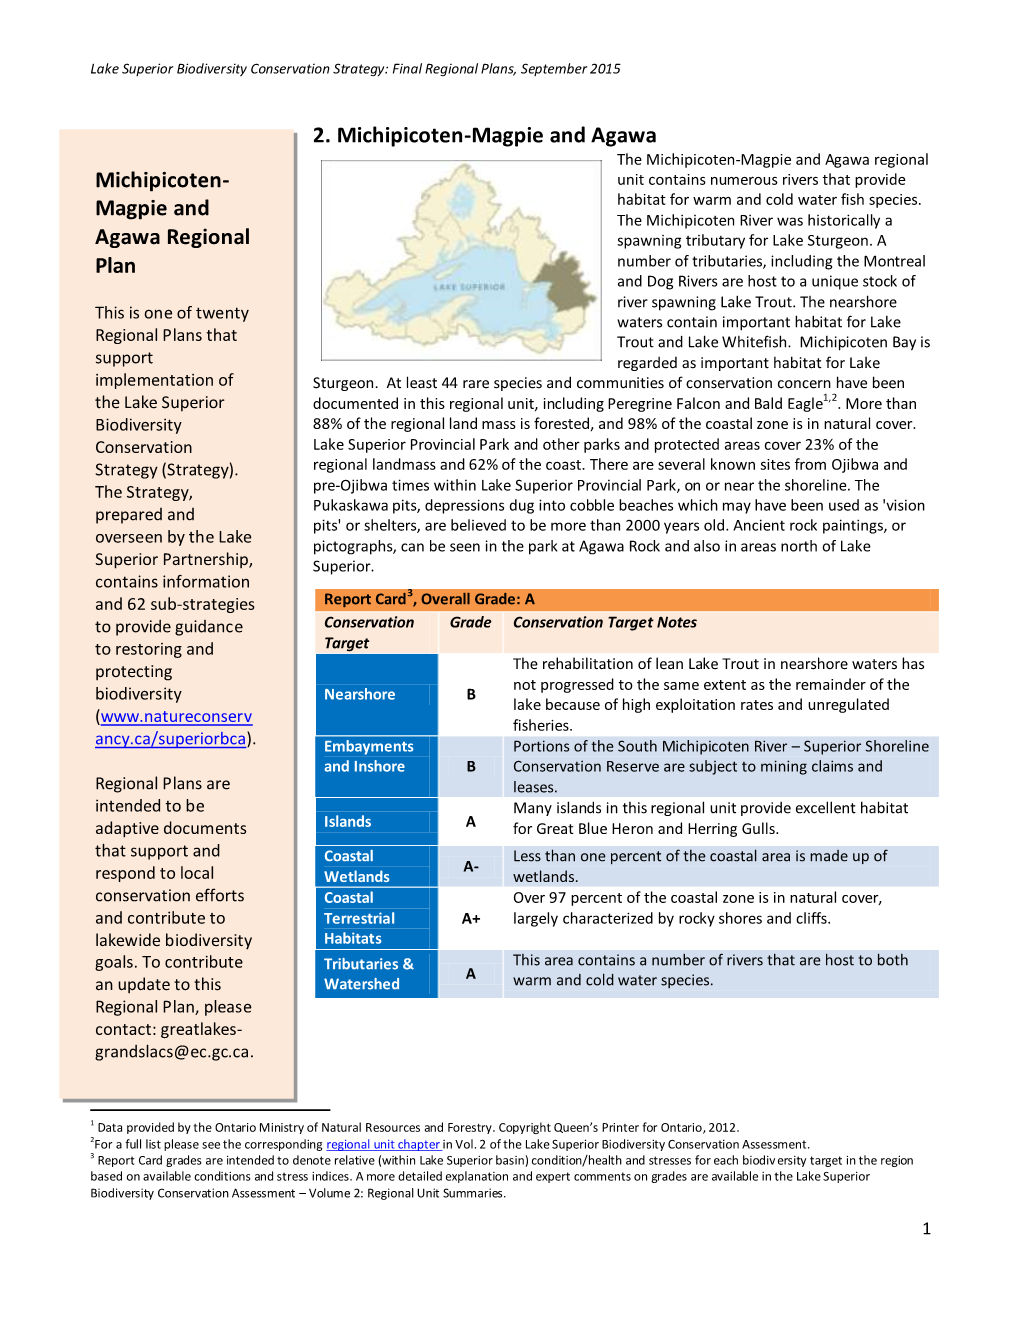 2-Michipicoten-Magpie and Agawa Regional Plan